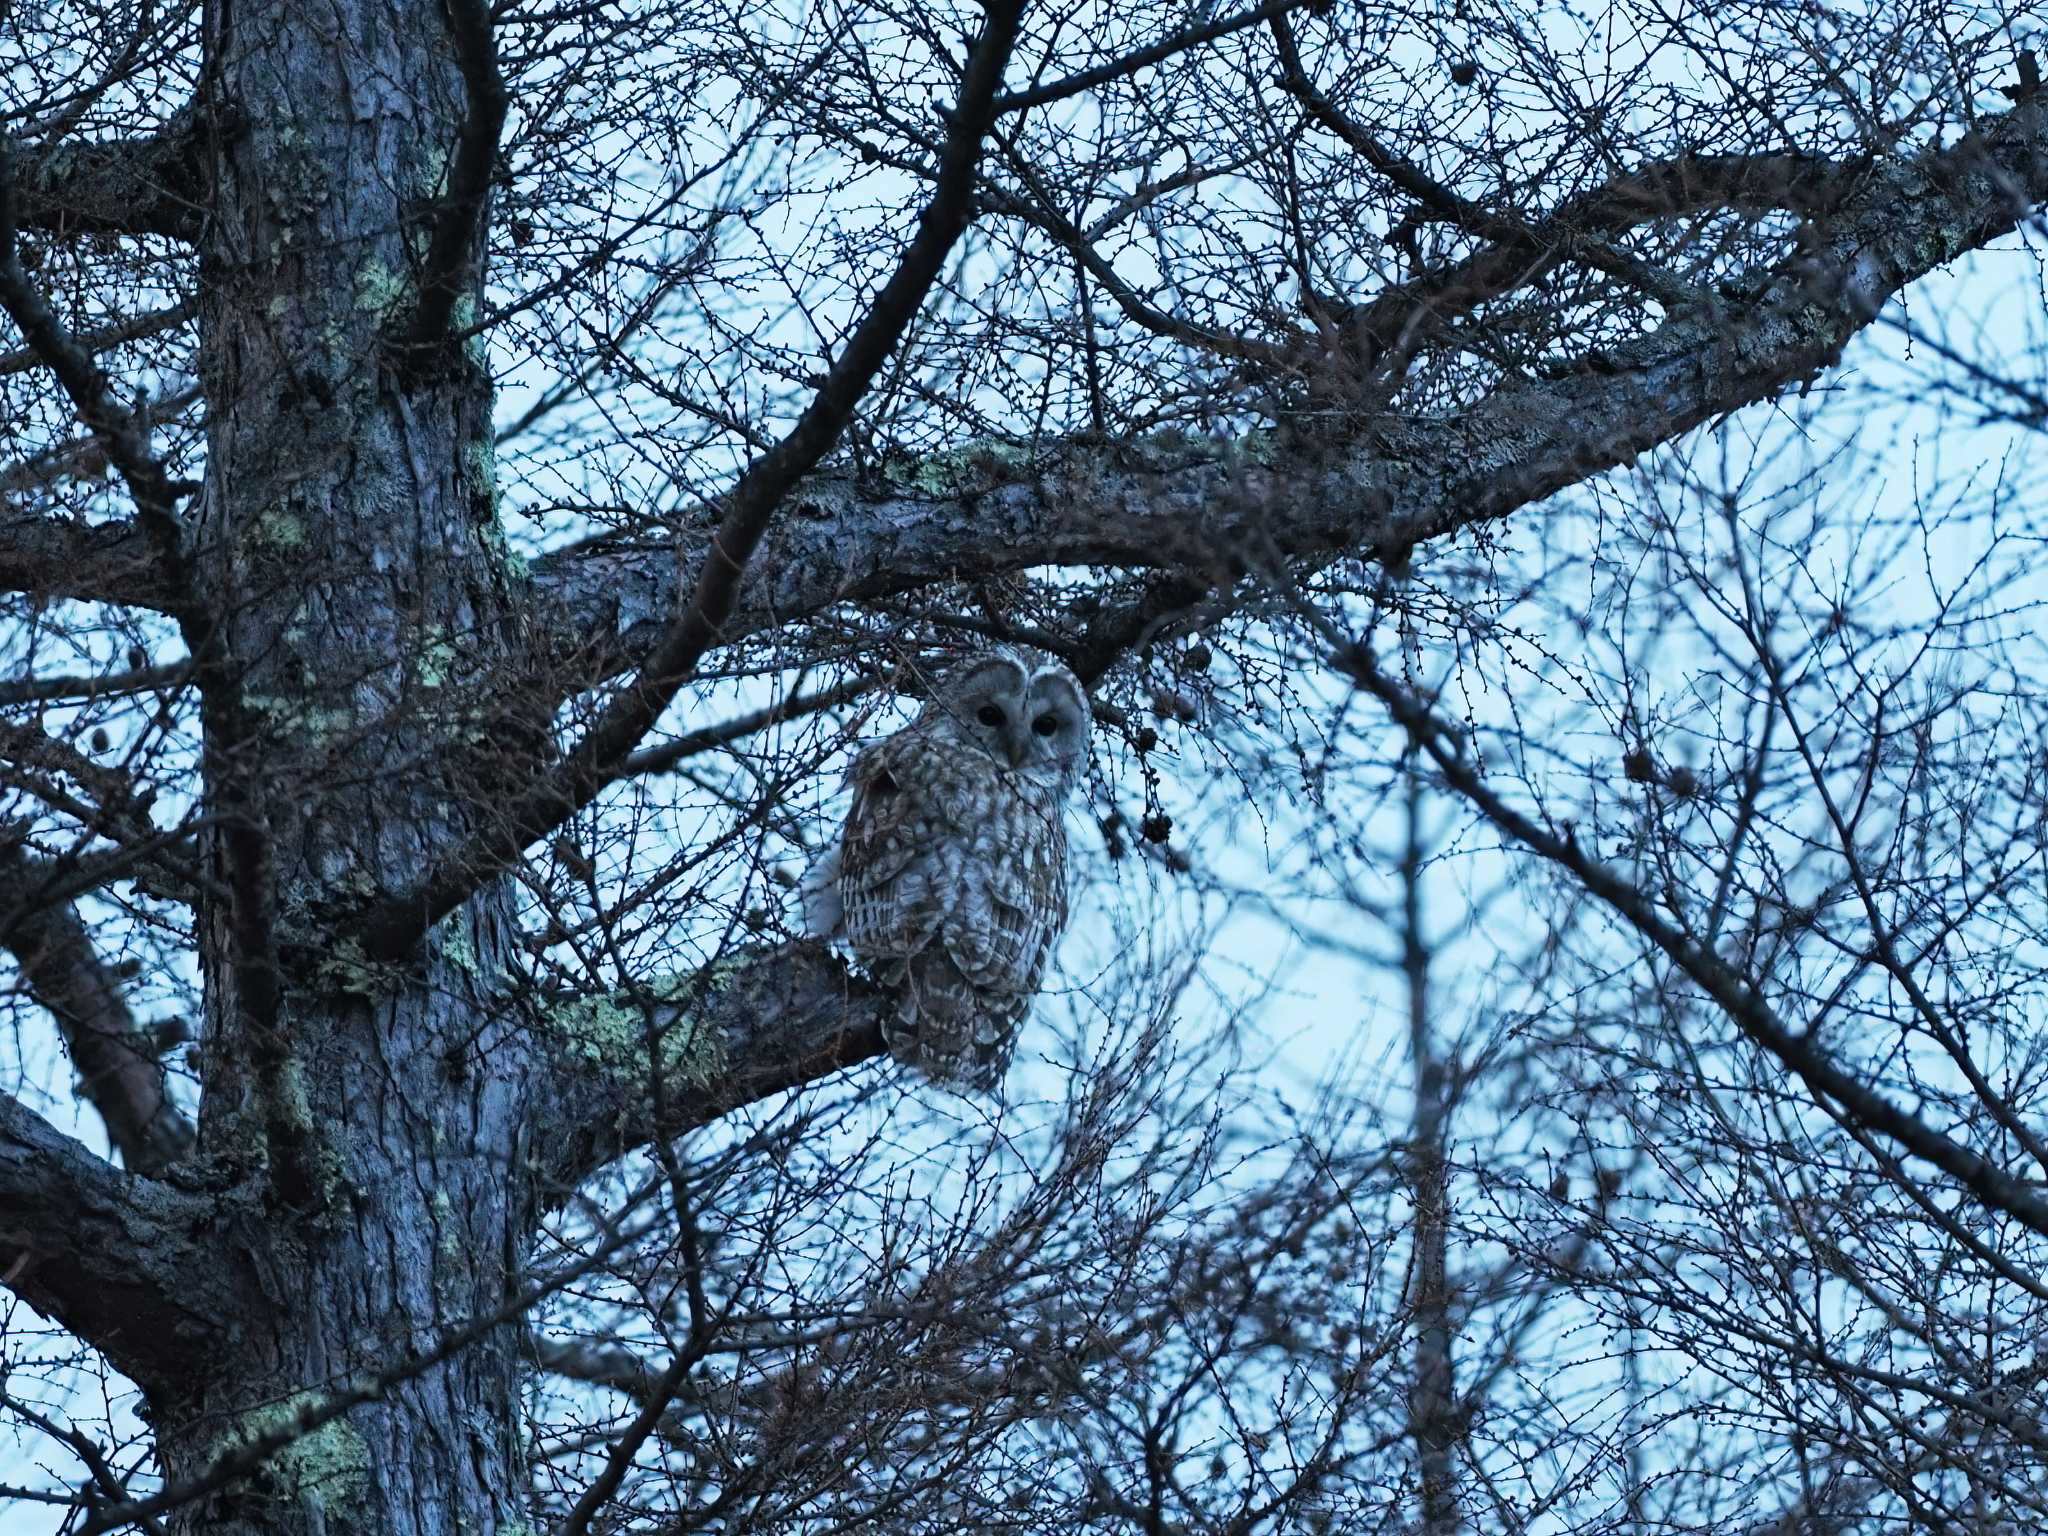 Photo of Ural Owl at Senjogahara Marshland by Siva_River